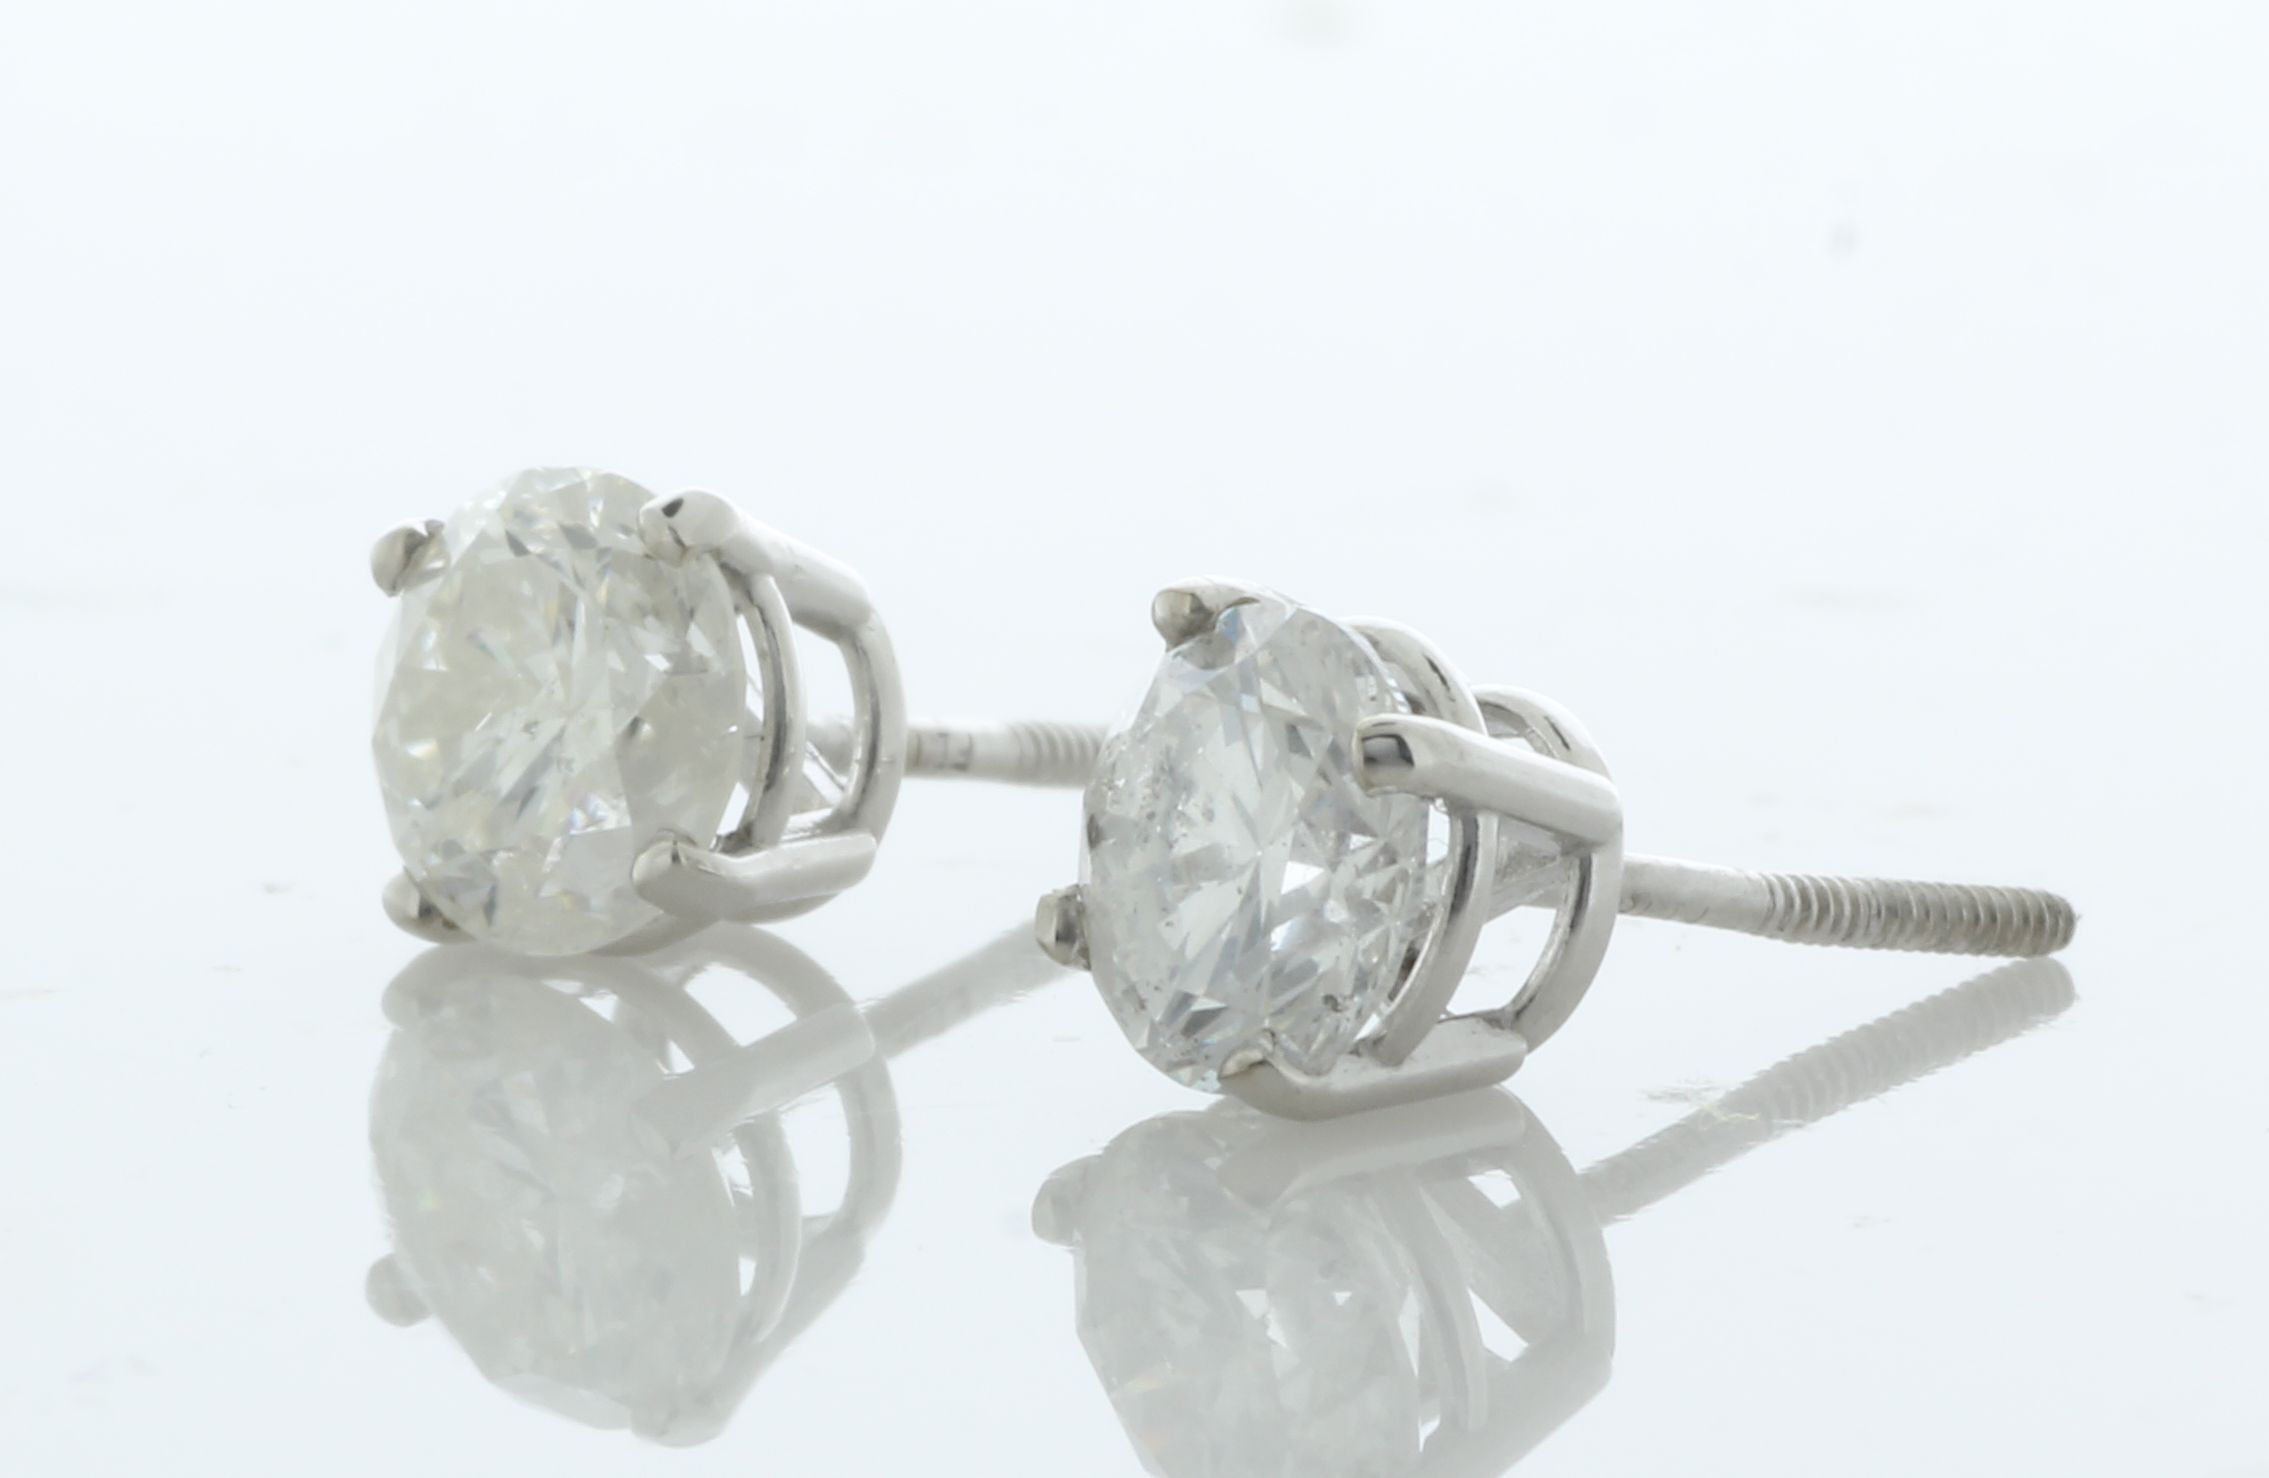 18ct White Gold Single Stone Gallery Set Diamond Earring 1.60 Carats - Image 2 of 4